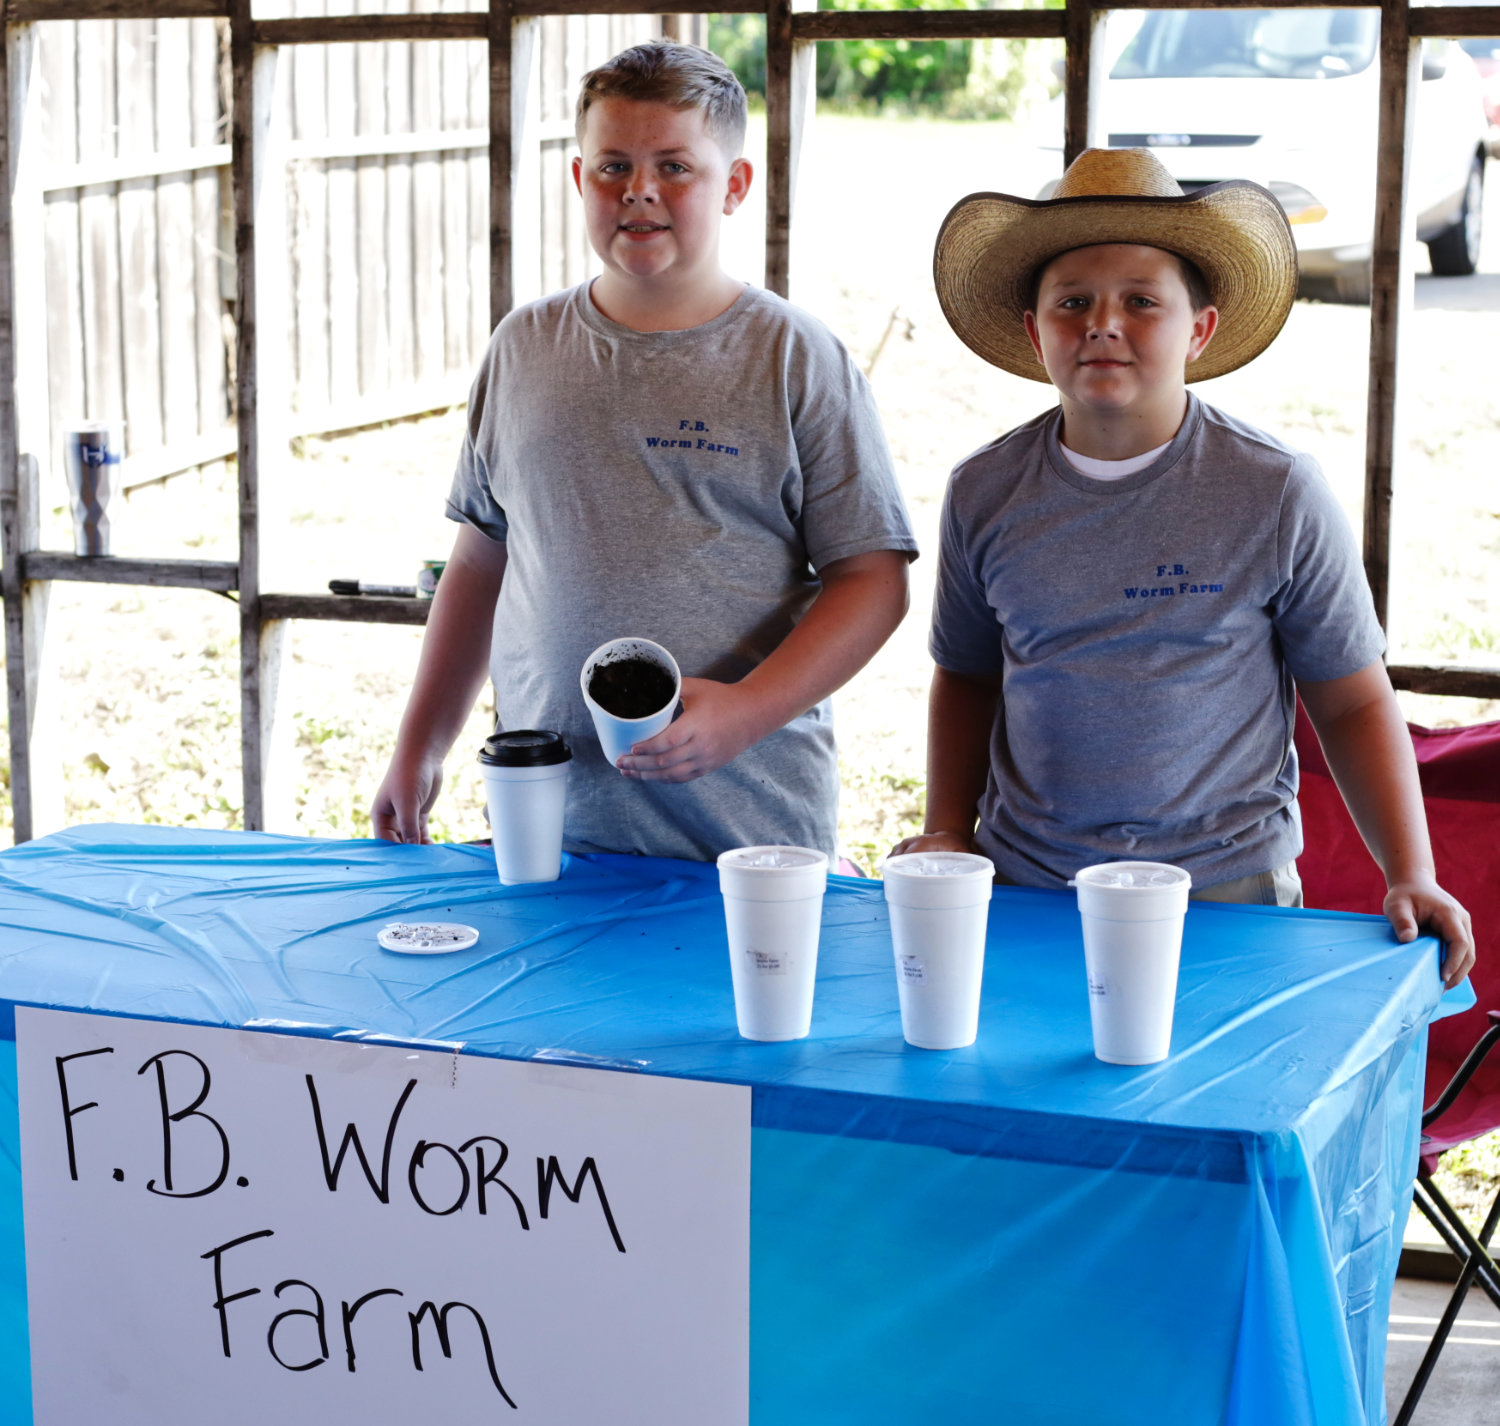 Proprietors Landon Burns (10) and Walker Fannin (11) had already bagged $30 in sales by mid-morning of the June 13 Hawkins Farmers Market.